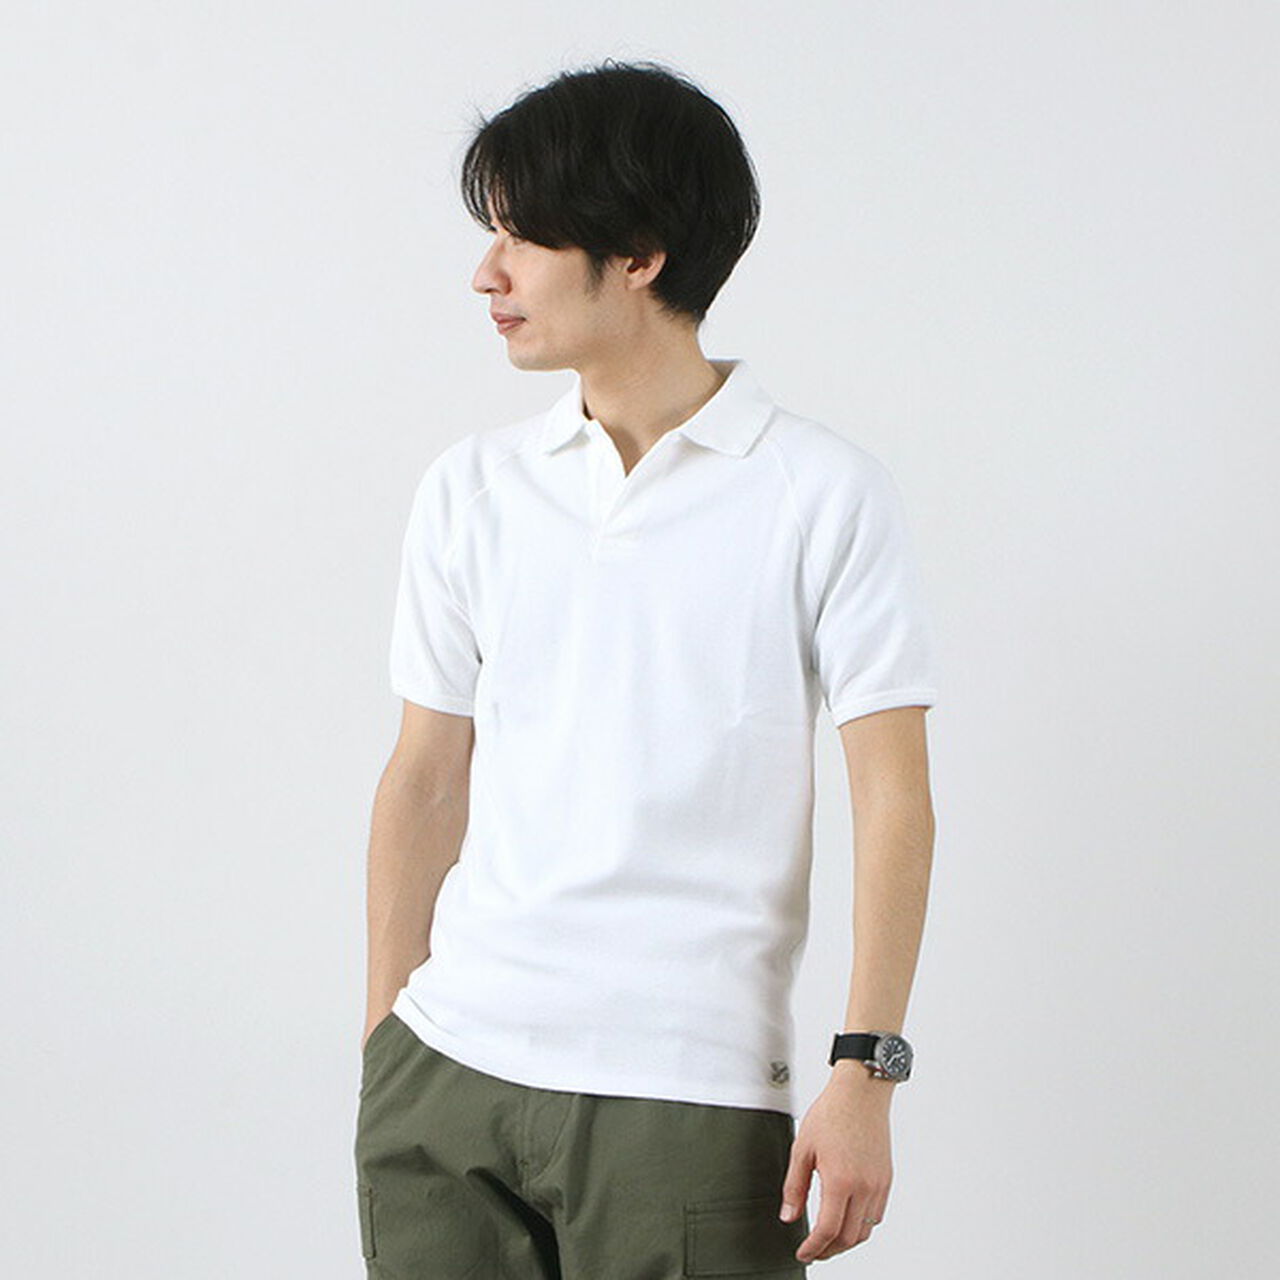 Laffy Spun Frye Polo Shirt,White, large image number 0